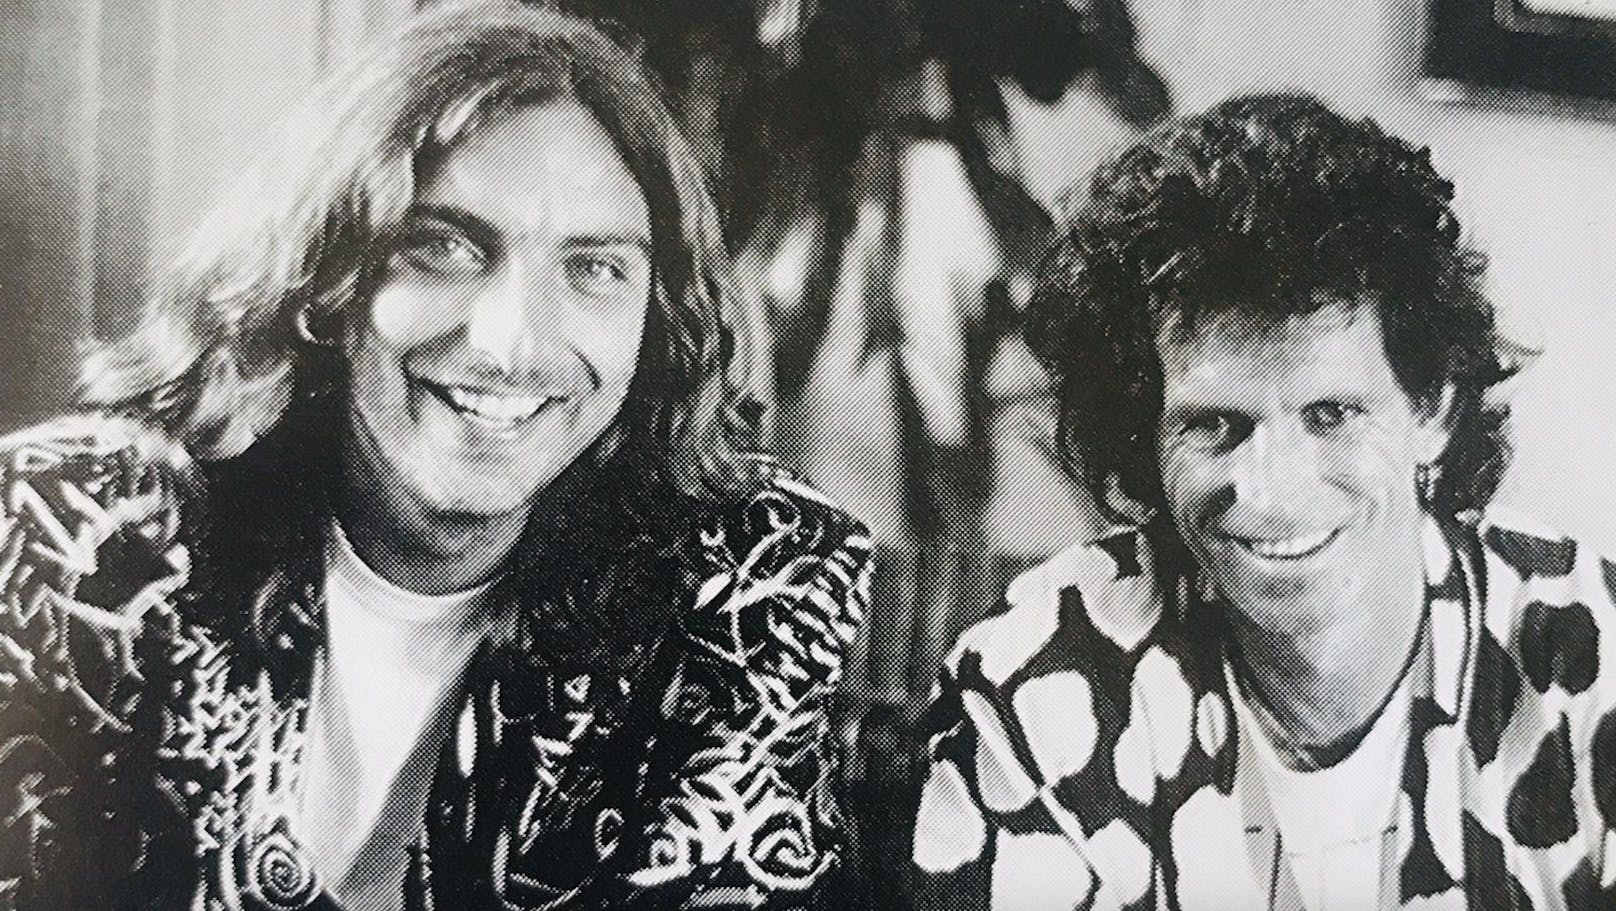 Rudi Dolezal und Keith Richards